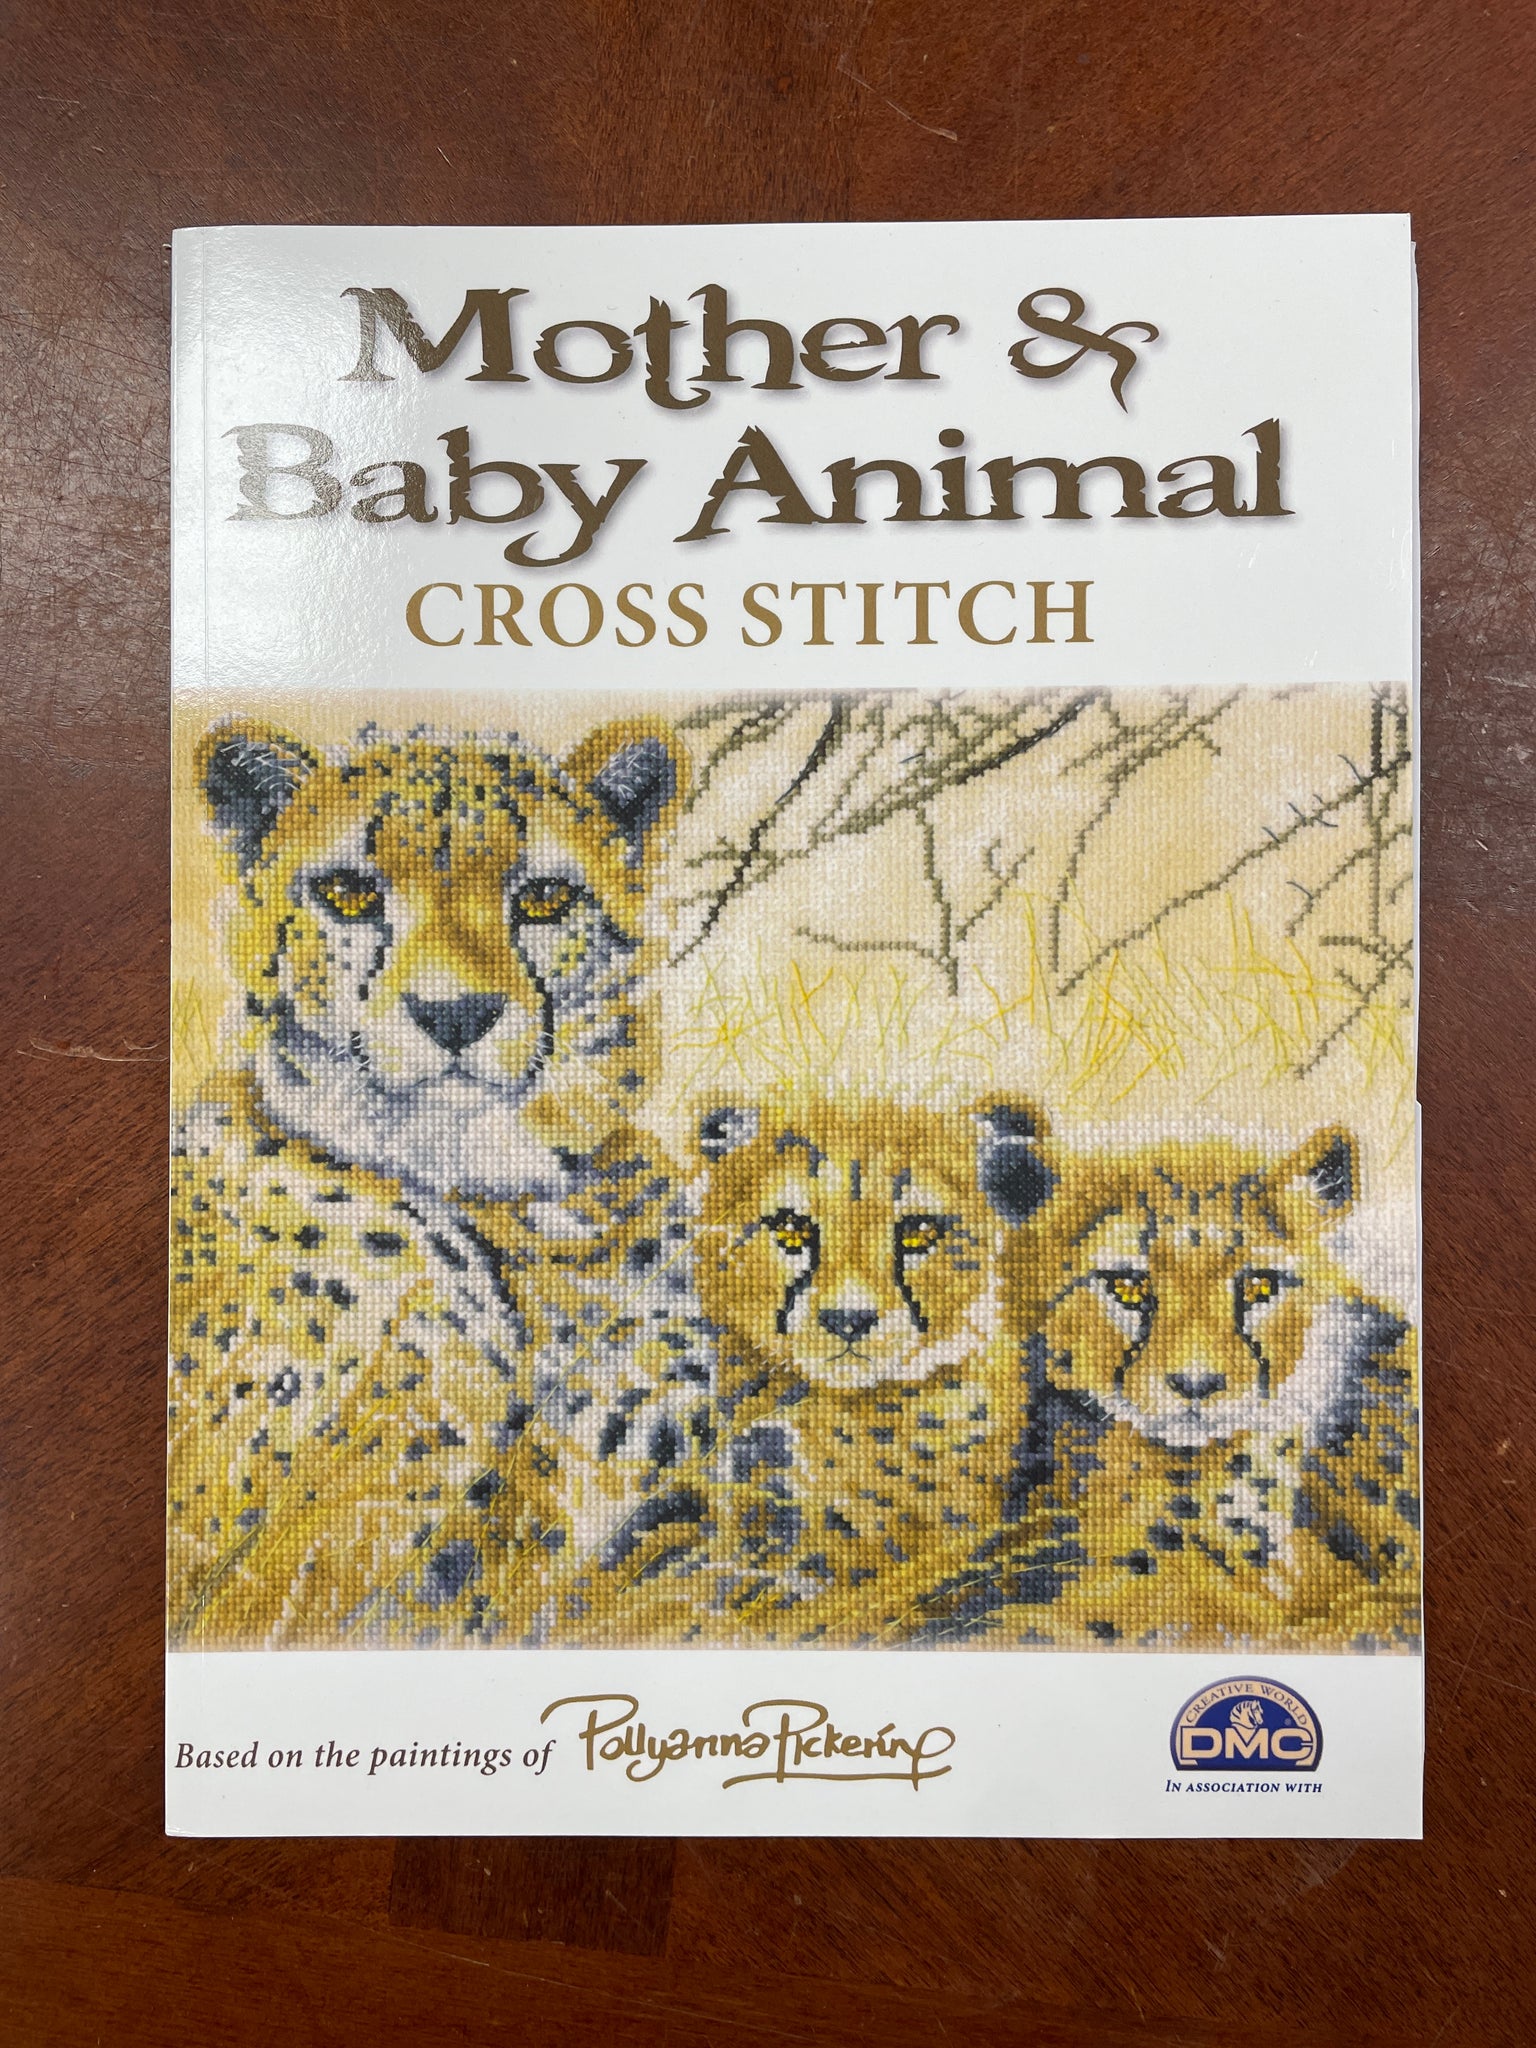 2009 Cross Stitch Book - "Mother & Baby Animal Cross Stitch"